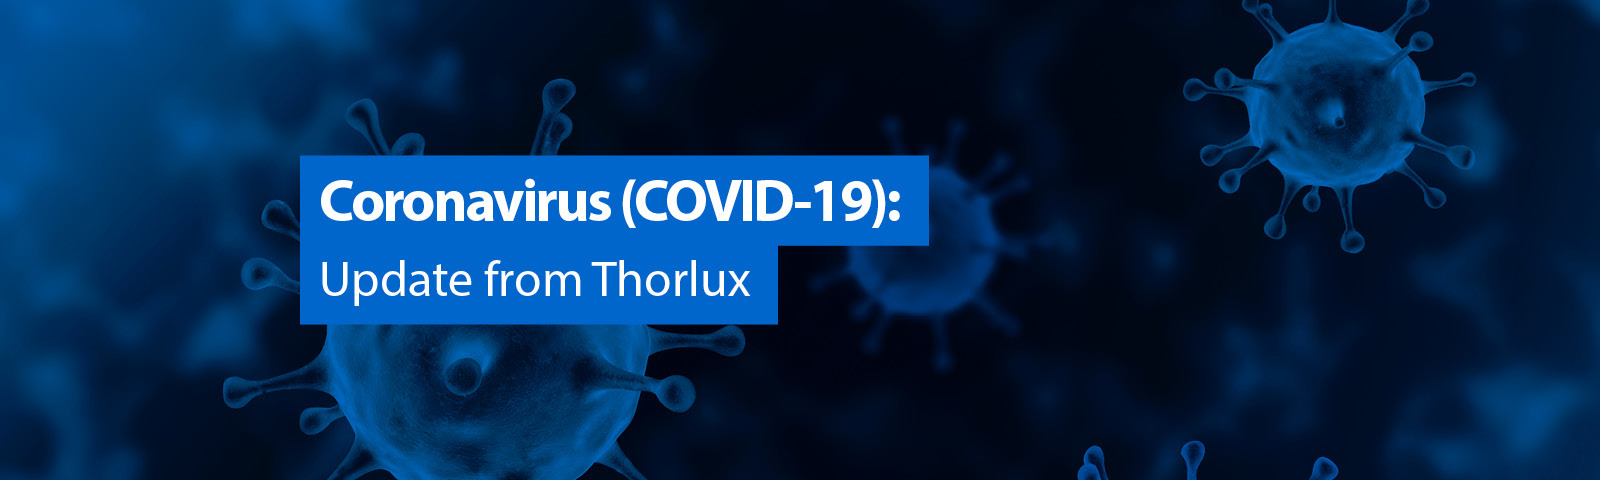 COVID-19 update from Thorlux - Job Retention Scheme